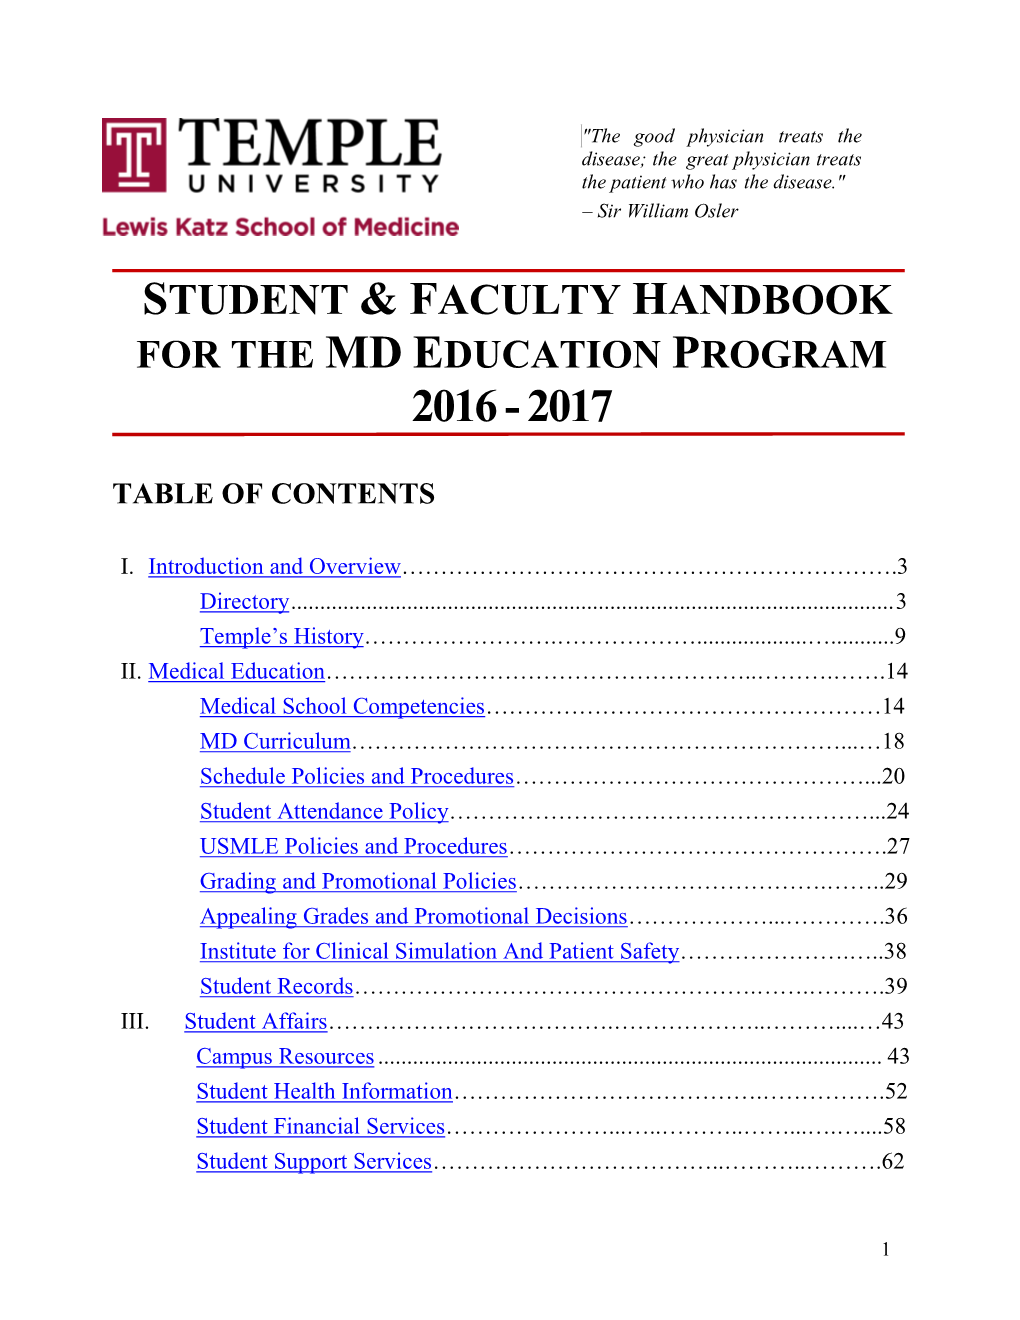 Medical Student & Faculty Handbook